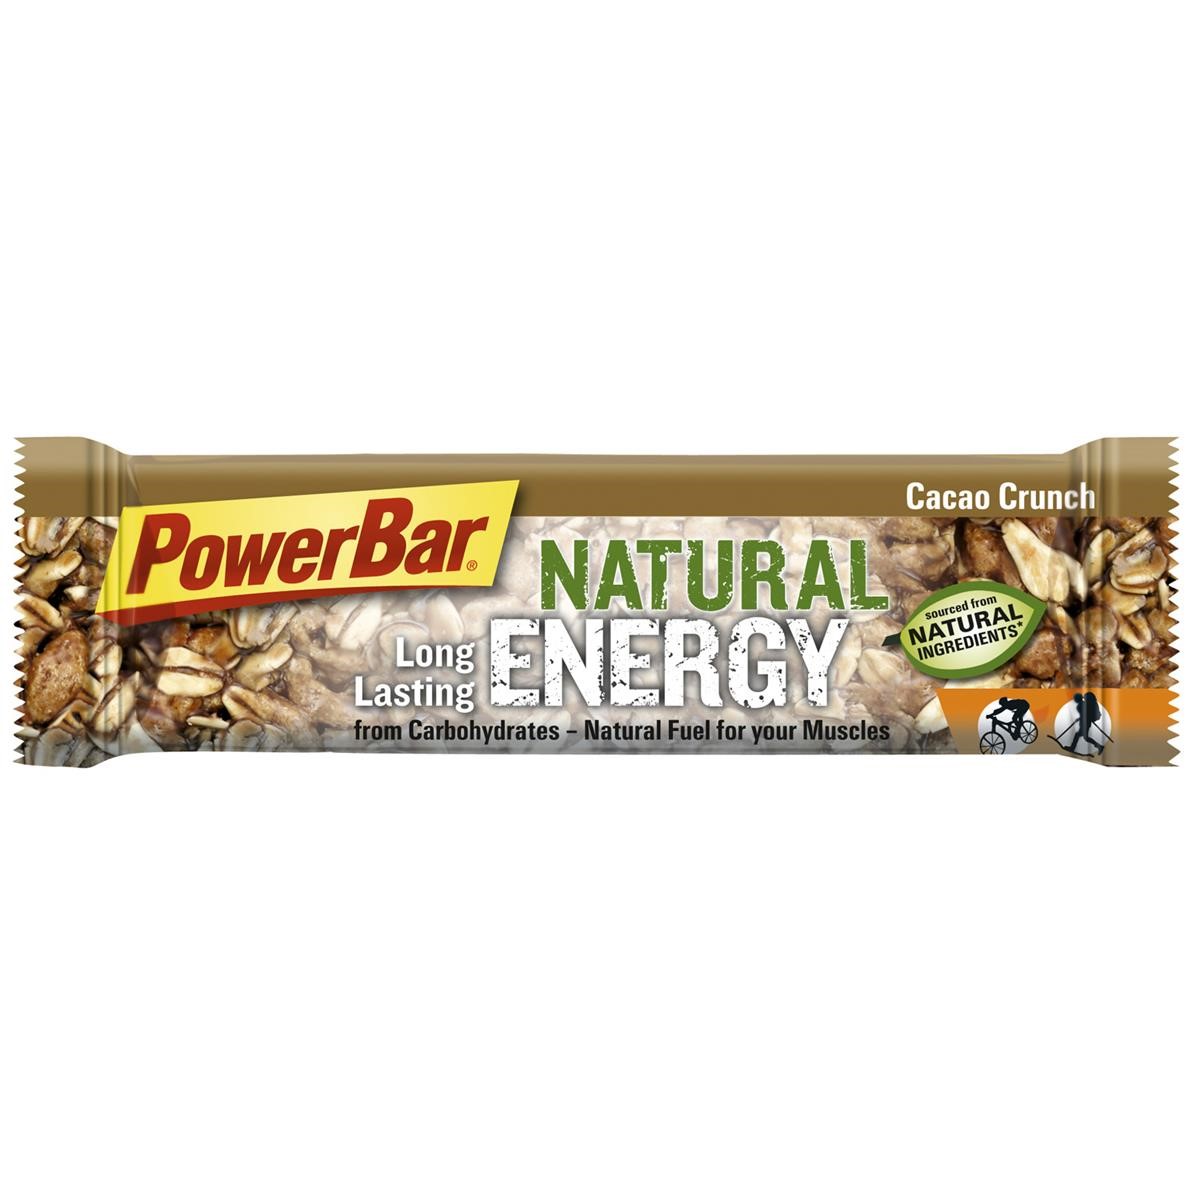 Lebensmittel/Fanartikel/Medien-Essen & Getränke - PowerBar Natural Energy Riegel Cacao Crunch, 40g